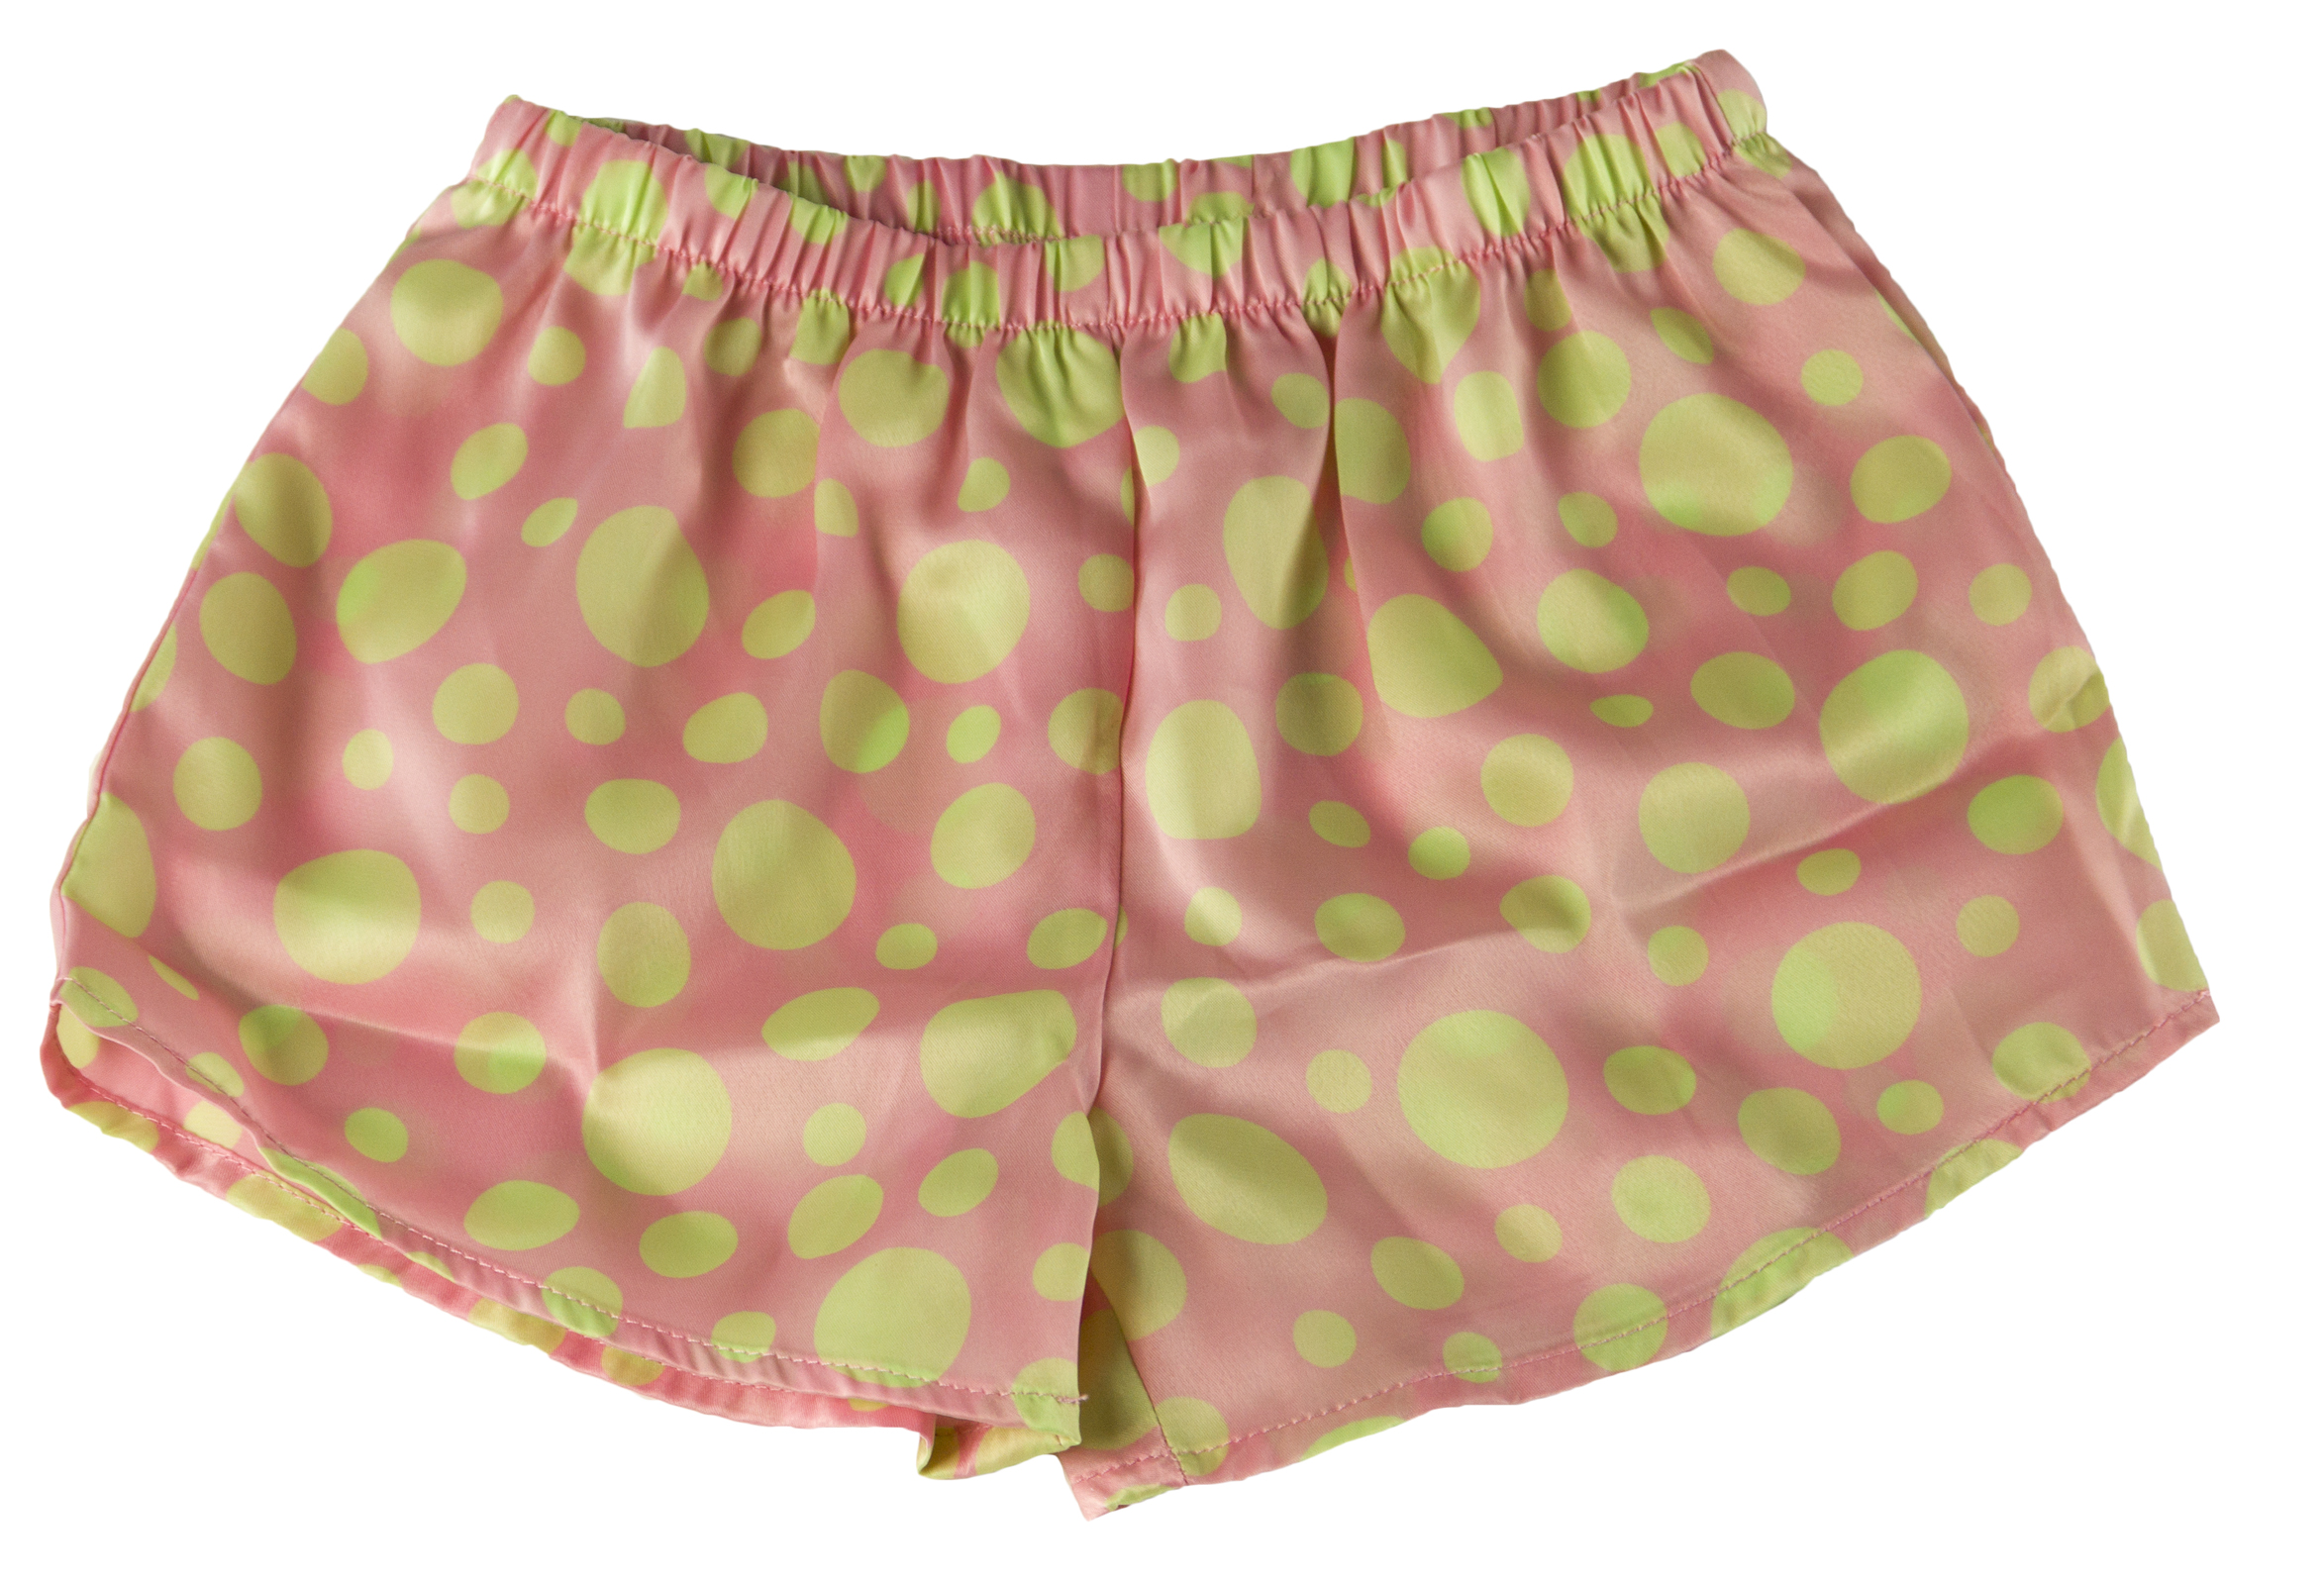 SARA'S PRINTS Toddler Girl's Pink Polka Dot Pajama Shorts Sz 2 $18 NEW ...